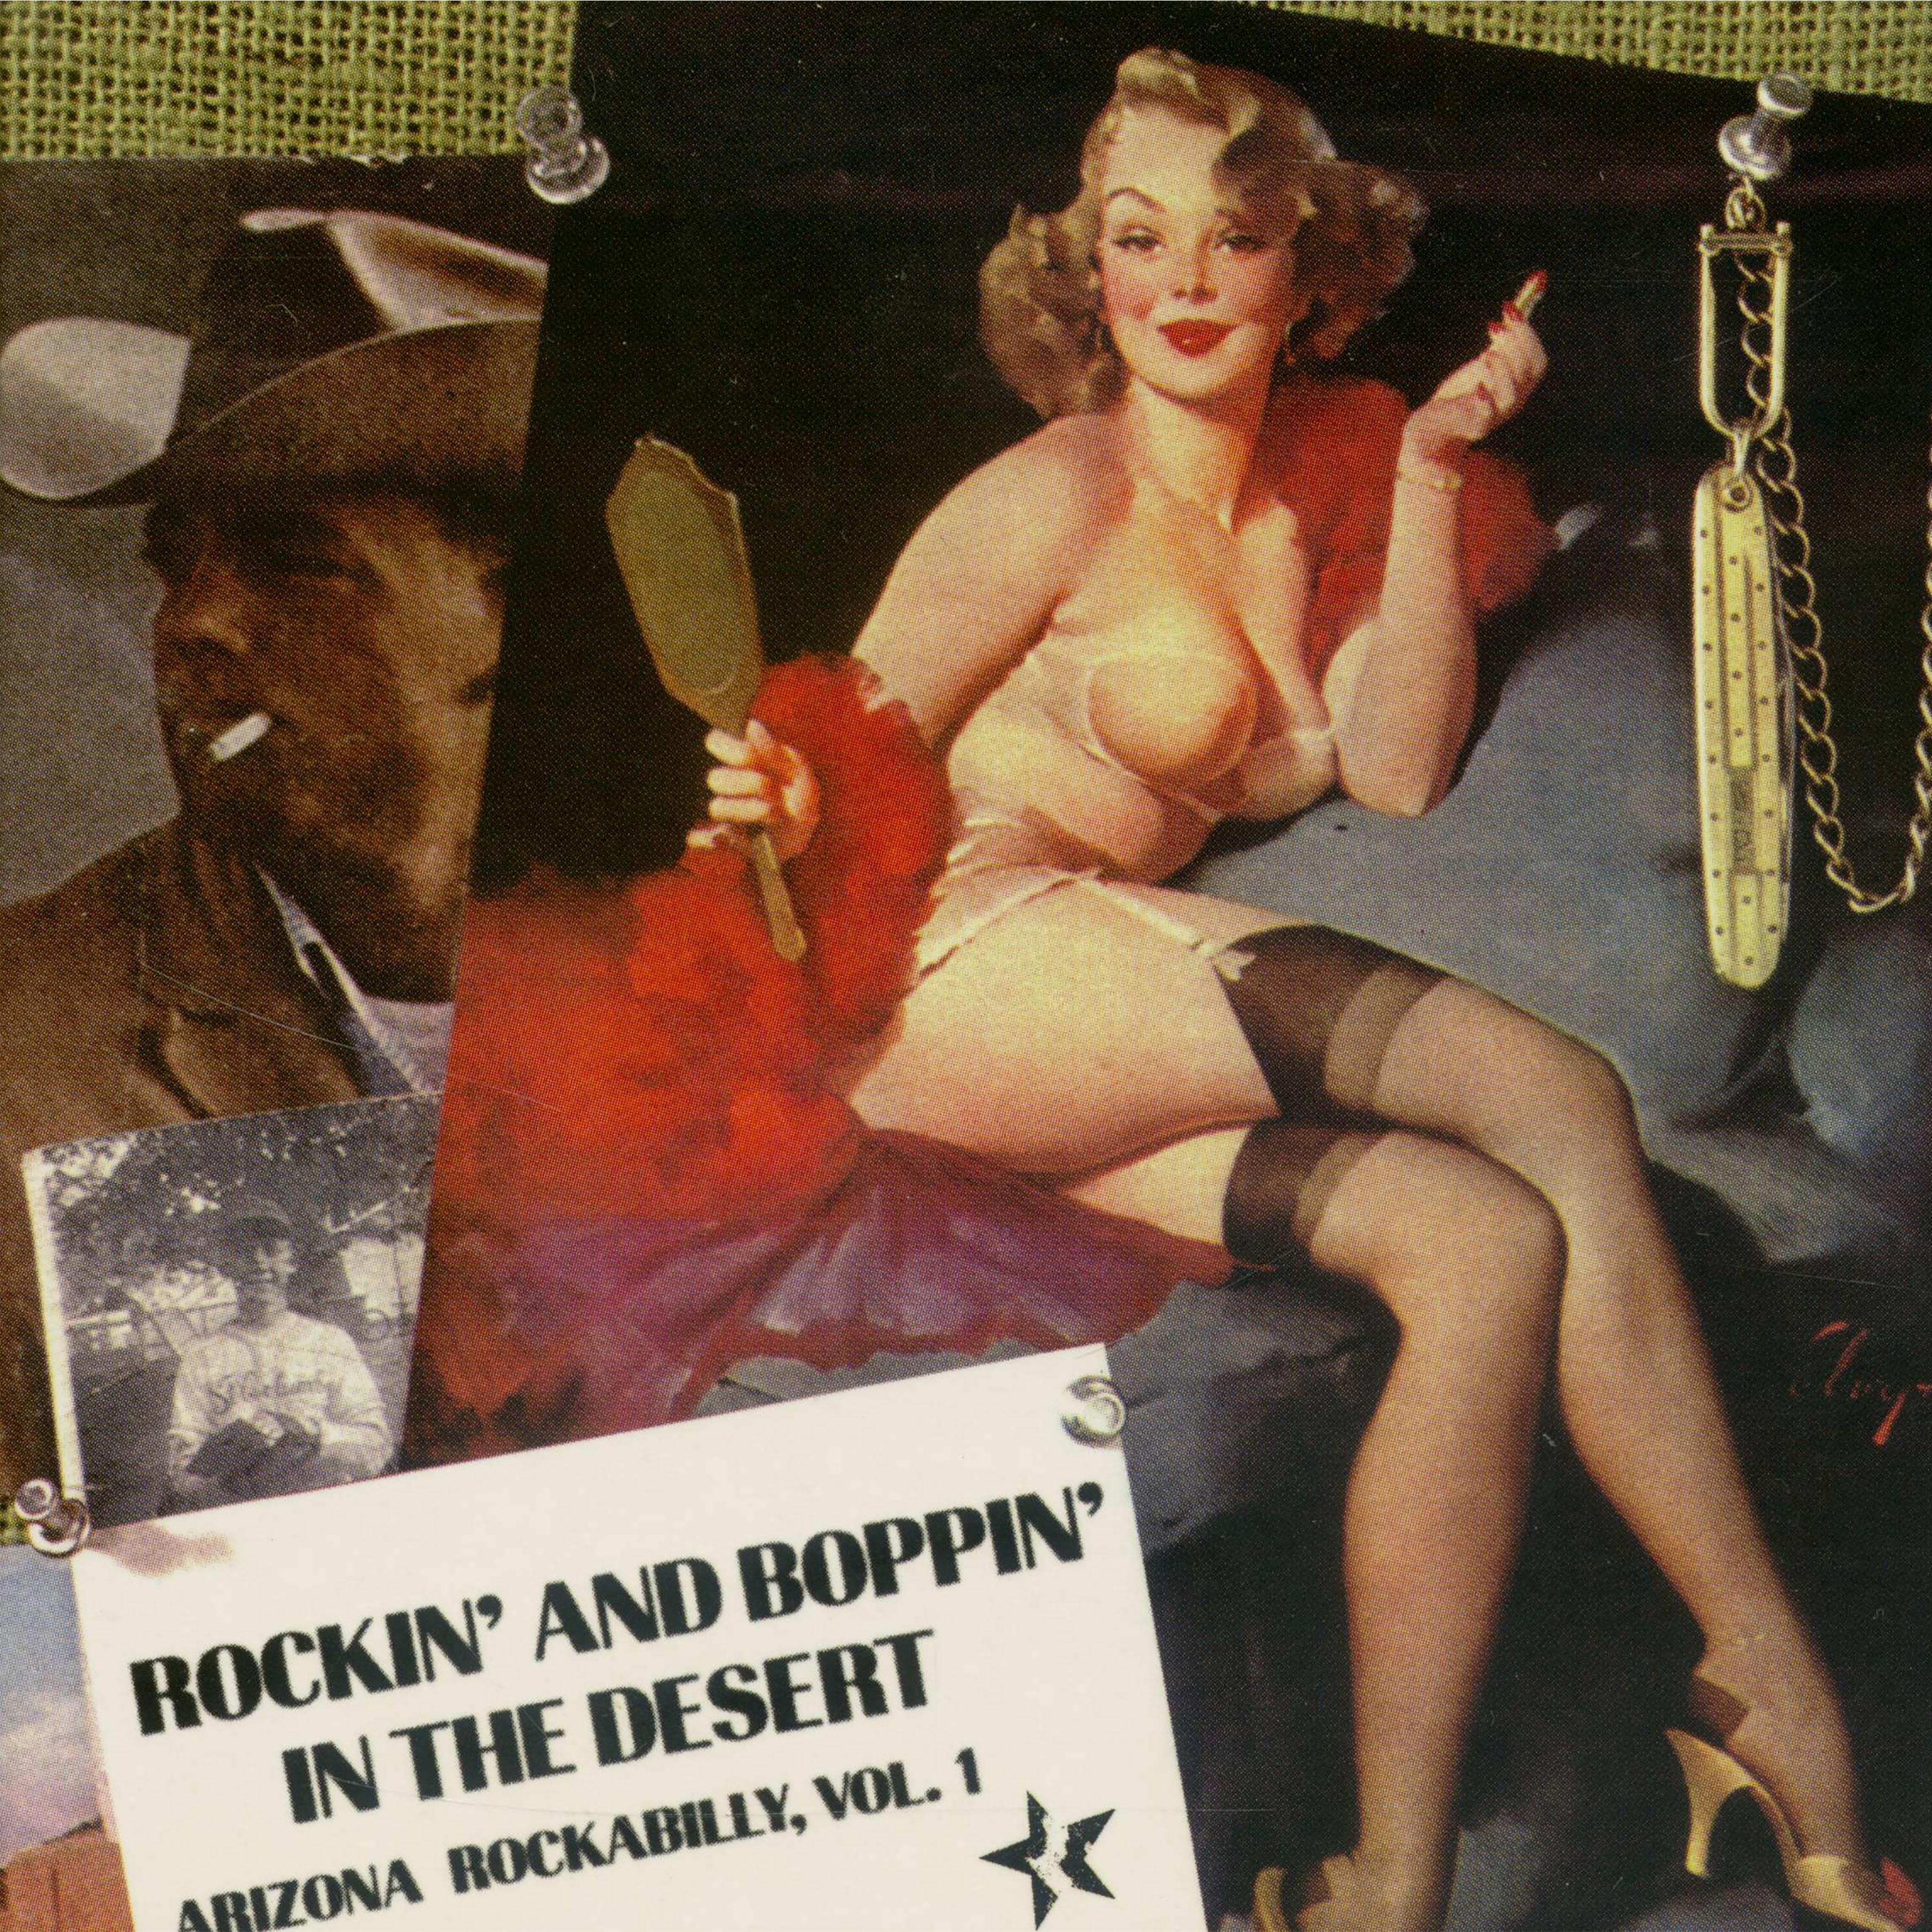 Rockin' and Boppin' in the Desert – Arizona Rockabilly, Vol. 1